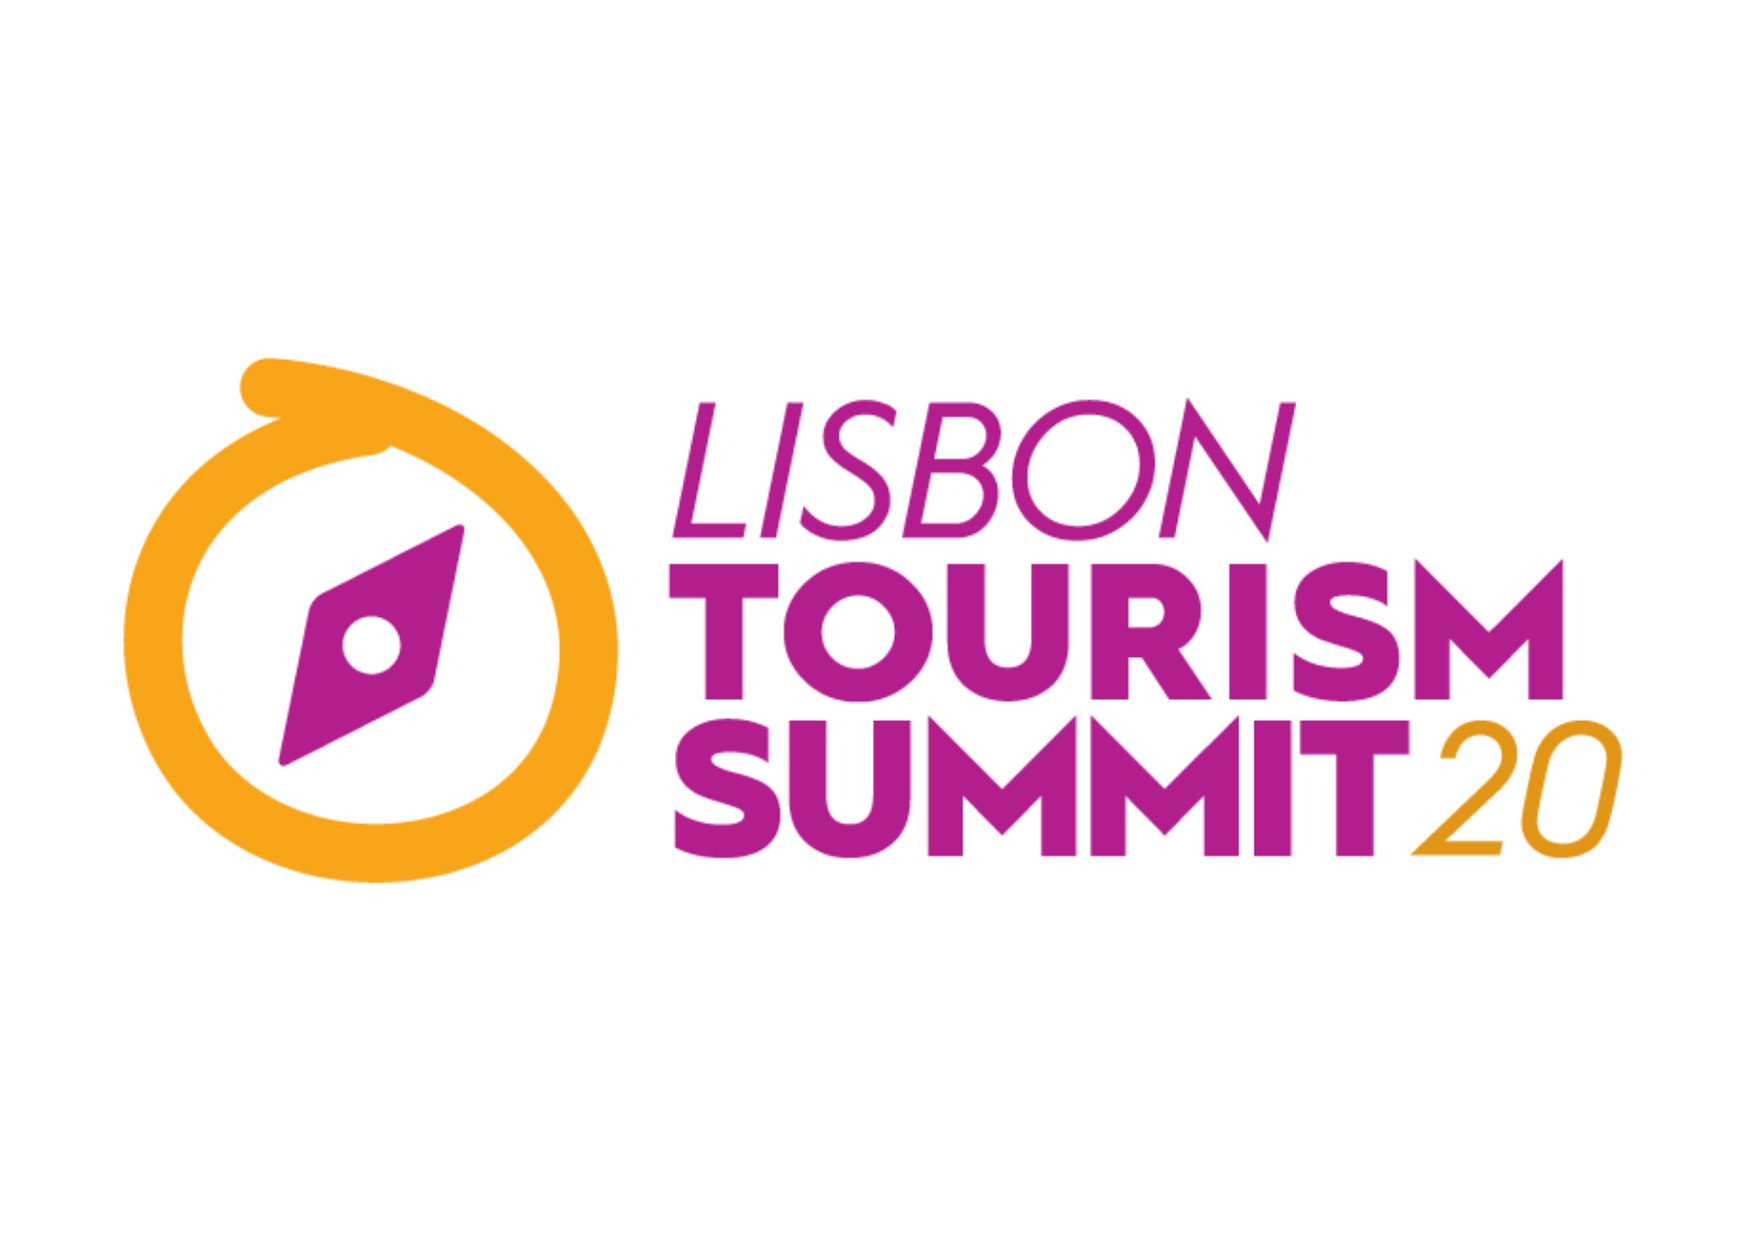 Lisbon Tourism Summit 20